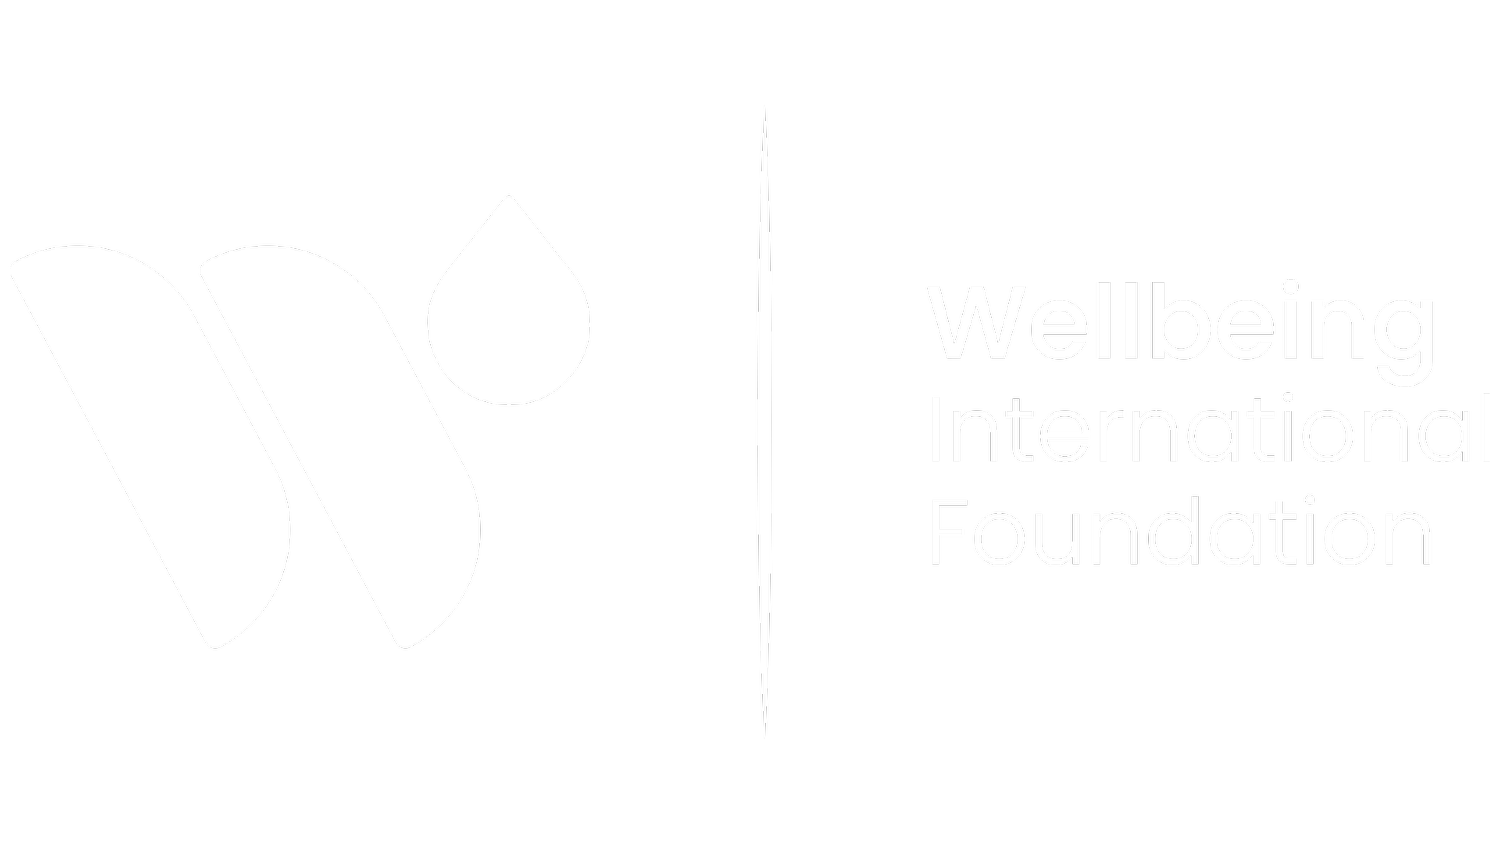 Wellbeing International Foundation